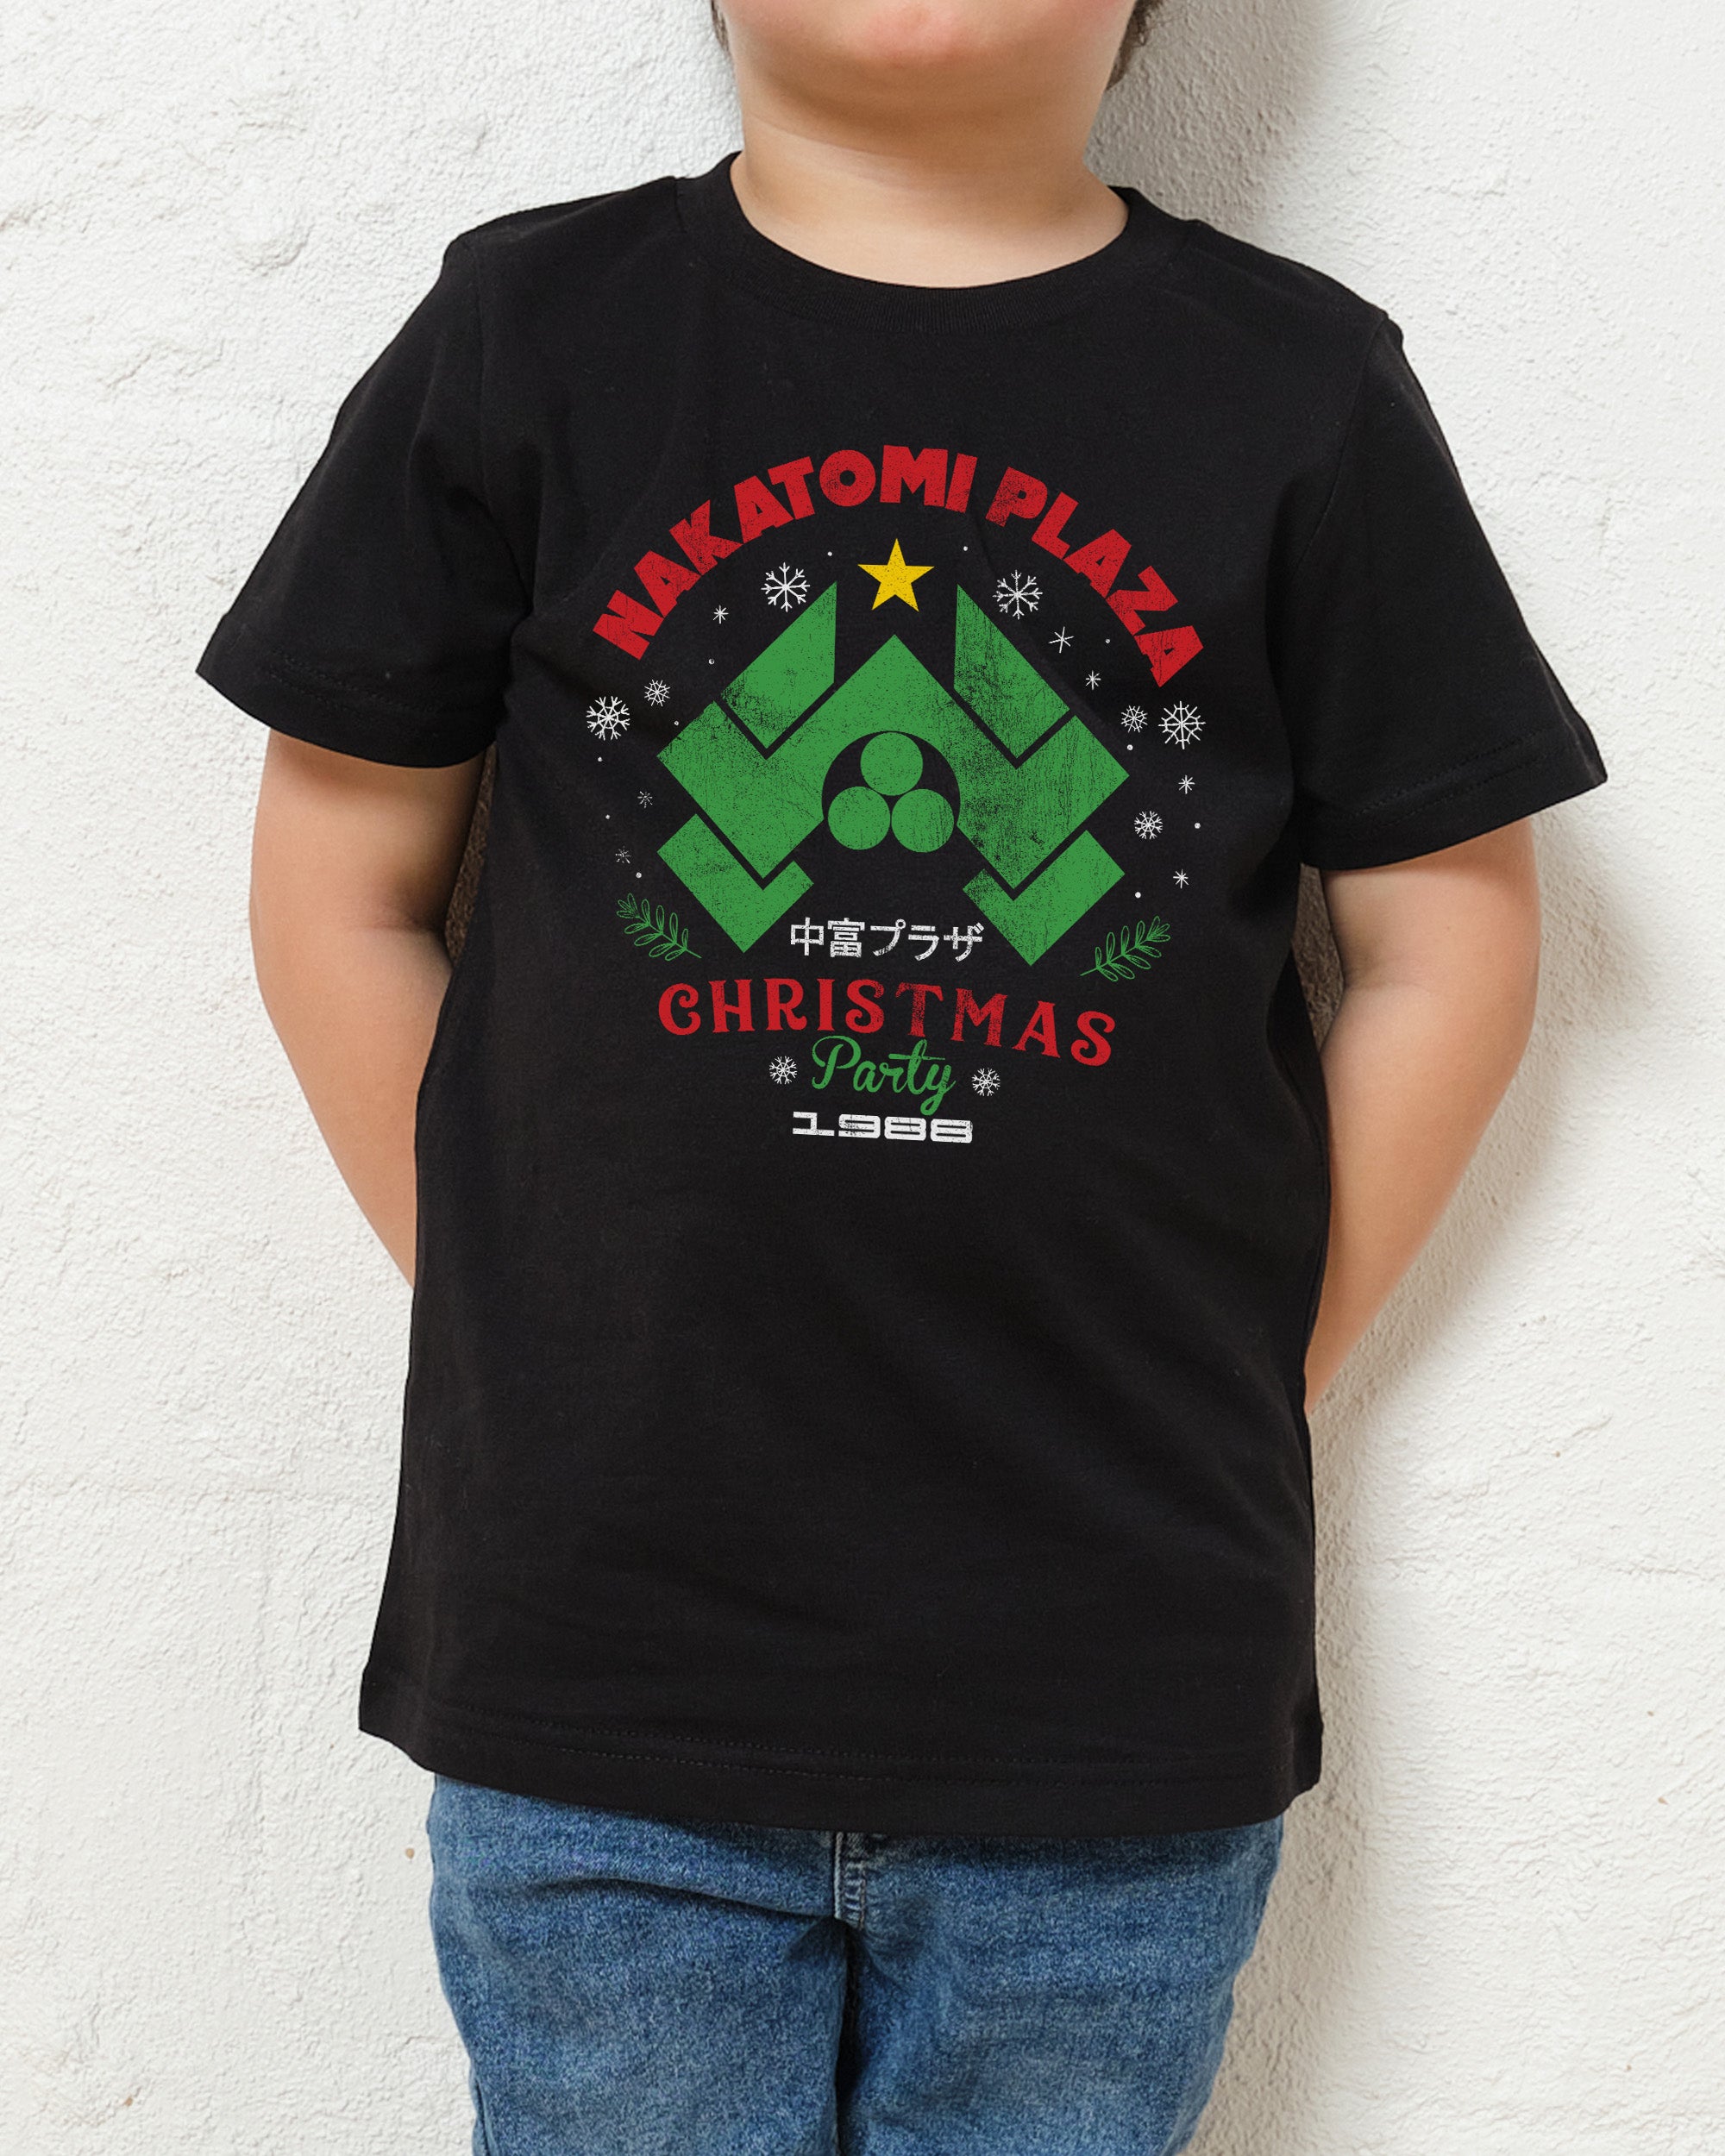 Nakatomi Christmas Party 1988 Kids T-Shirt Australia Online